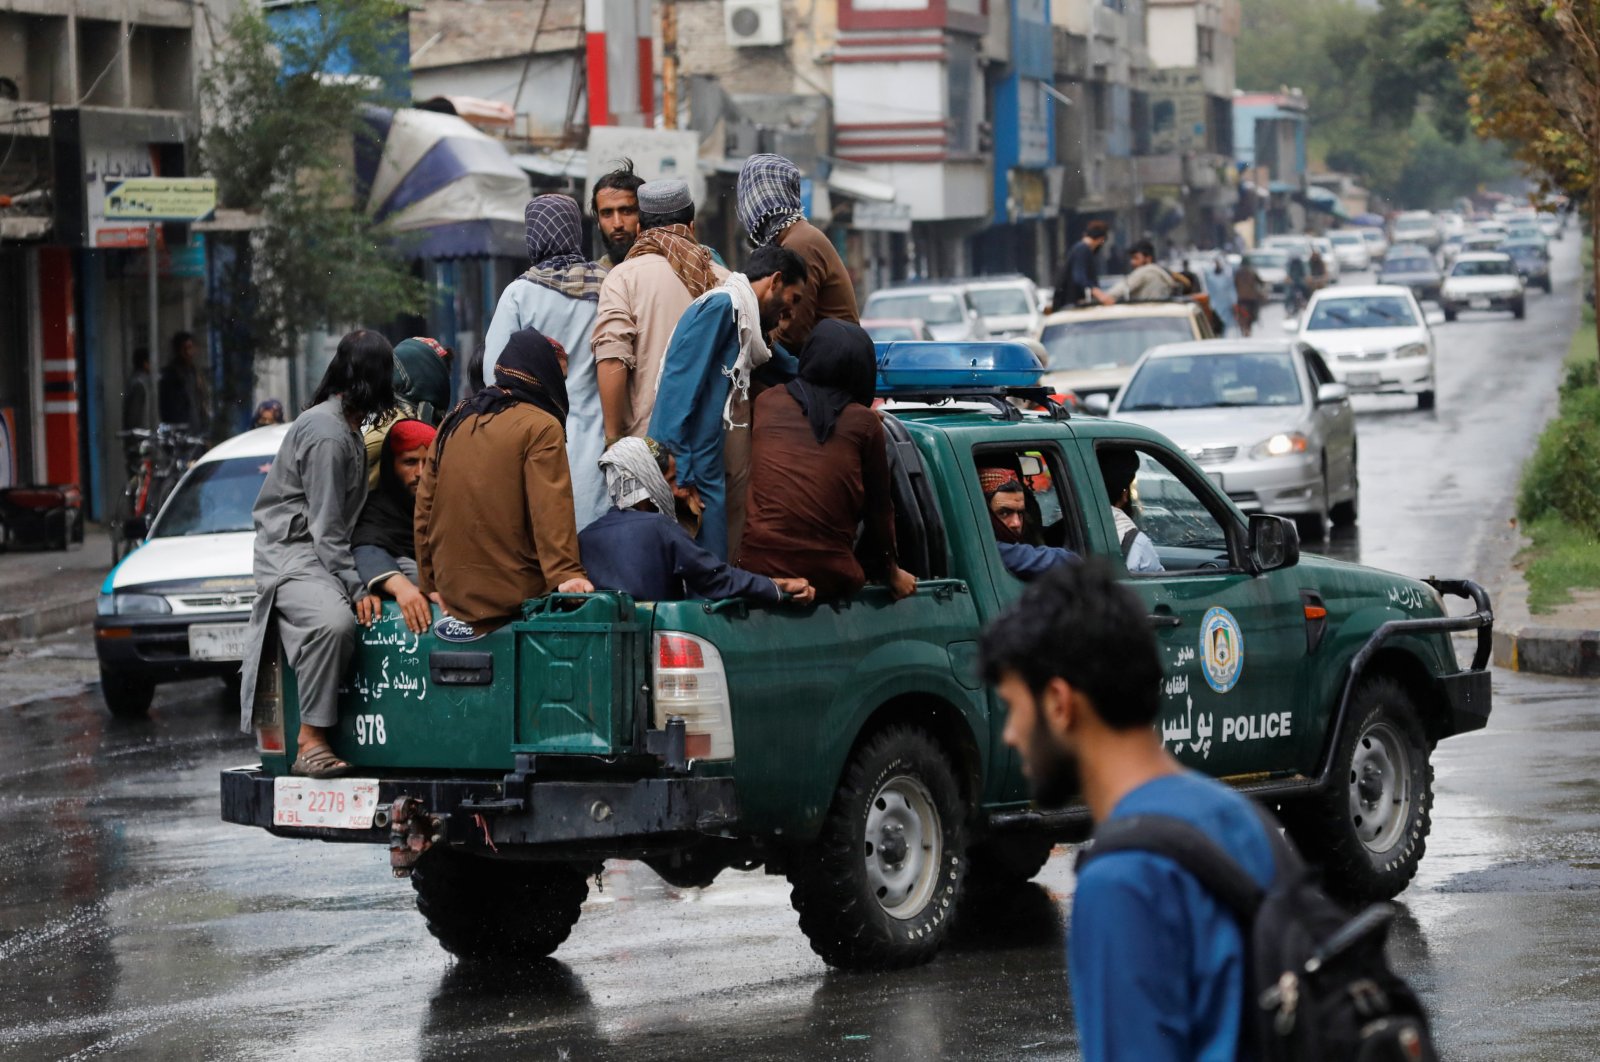 Taliban fighters drive a car on a street following the killing of Al Qaeda leader Ayman al-Zawahiri in a U.S. strike over the weekend, in Kabul, Afghanistan, Aug. 2, 2022. (Reuters Photo)